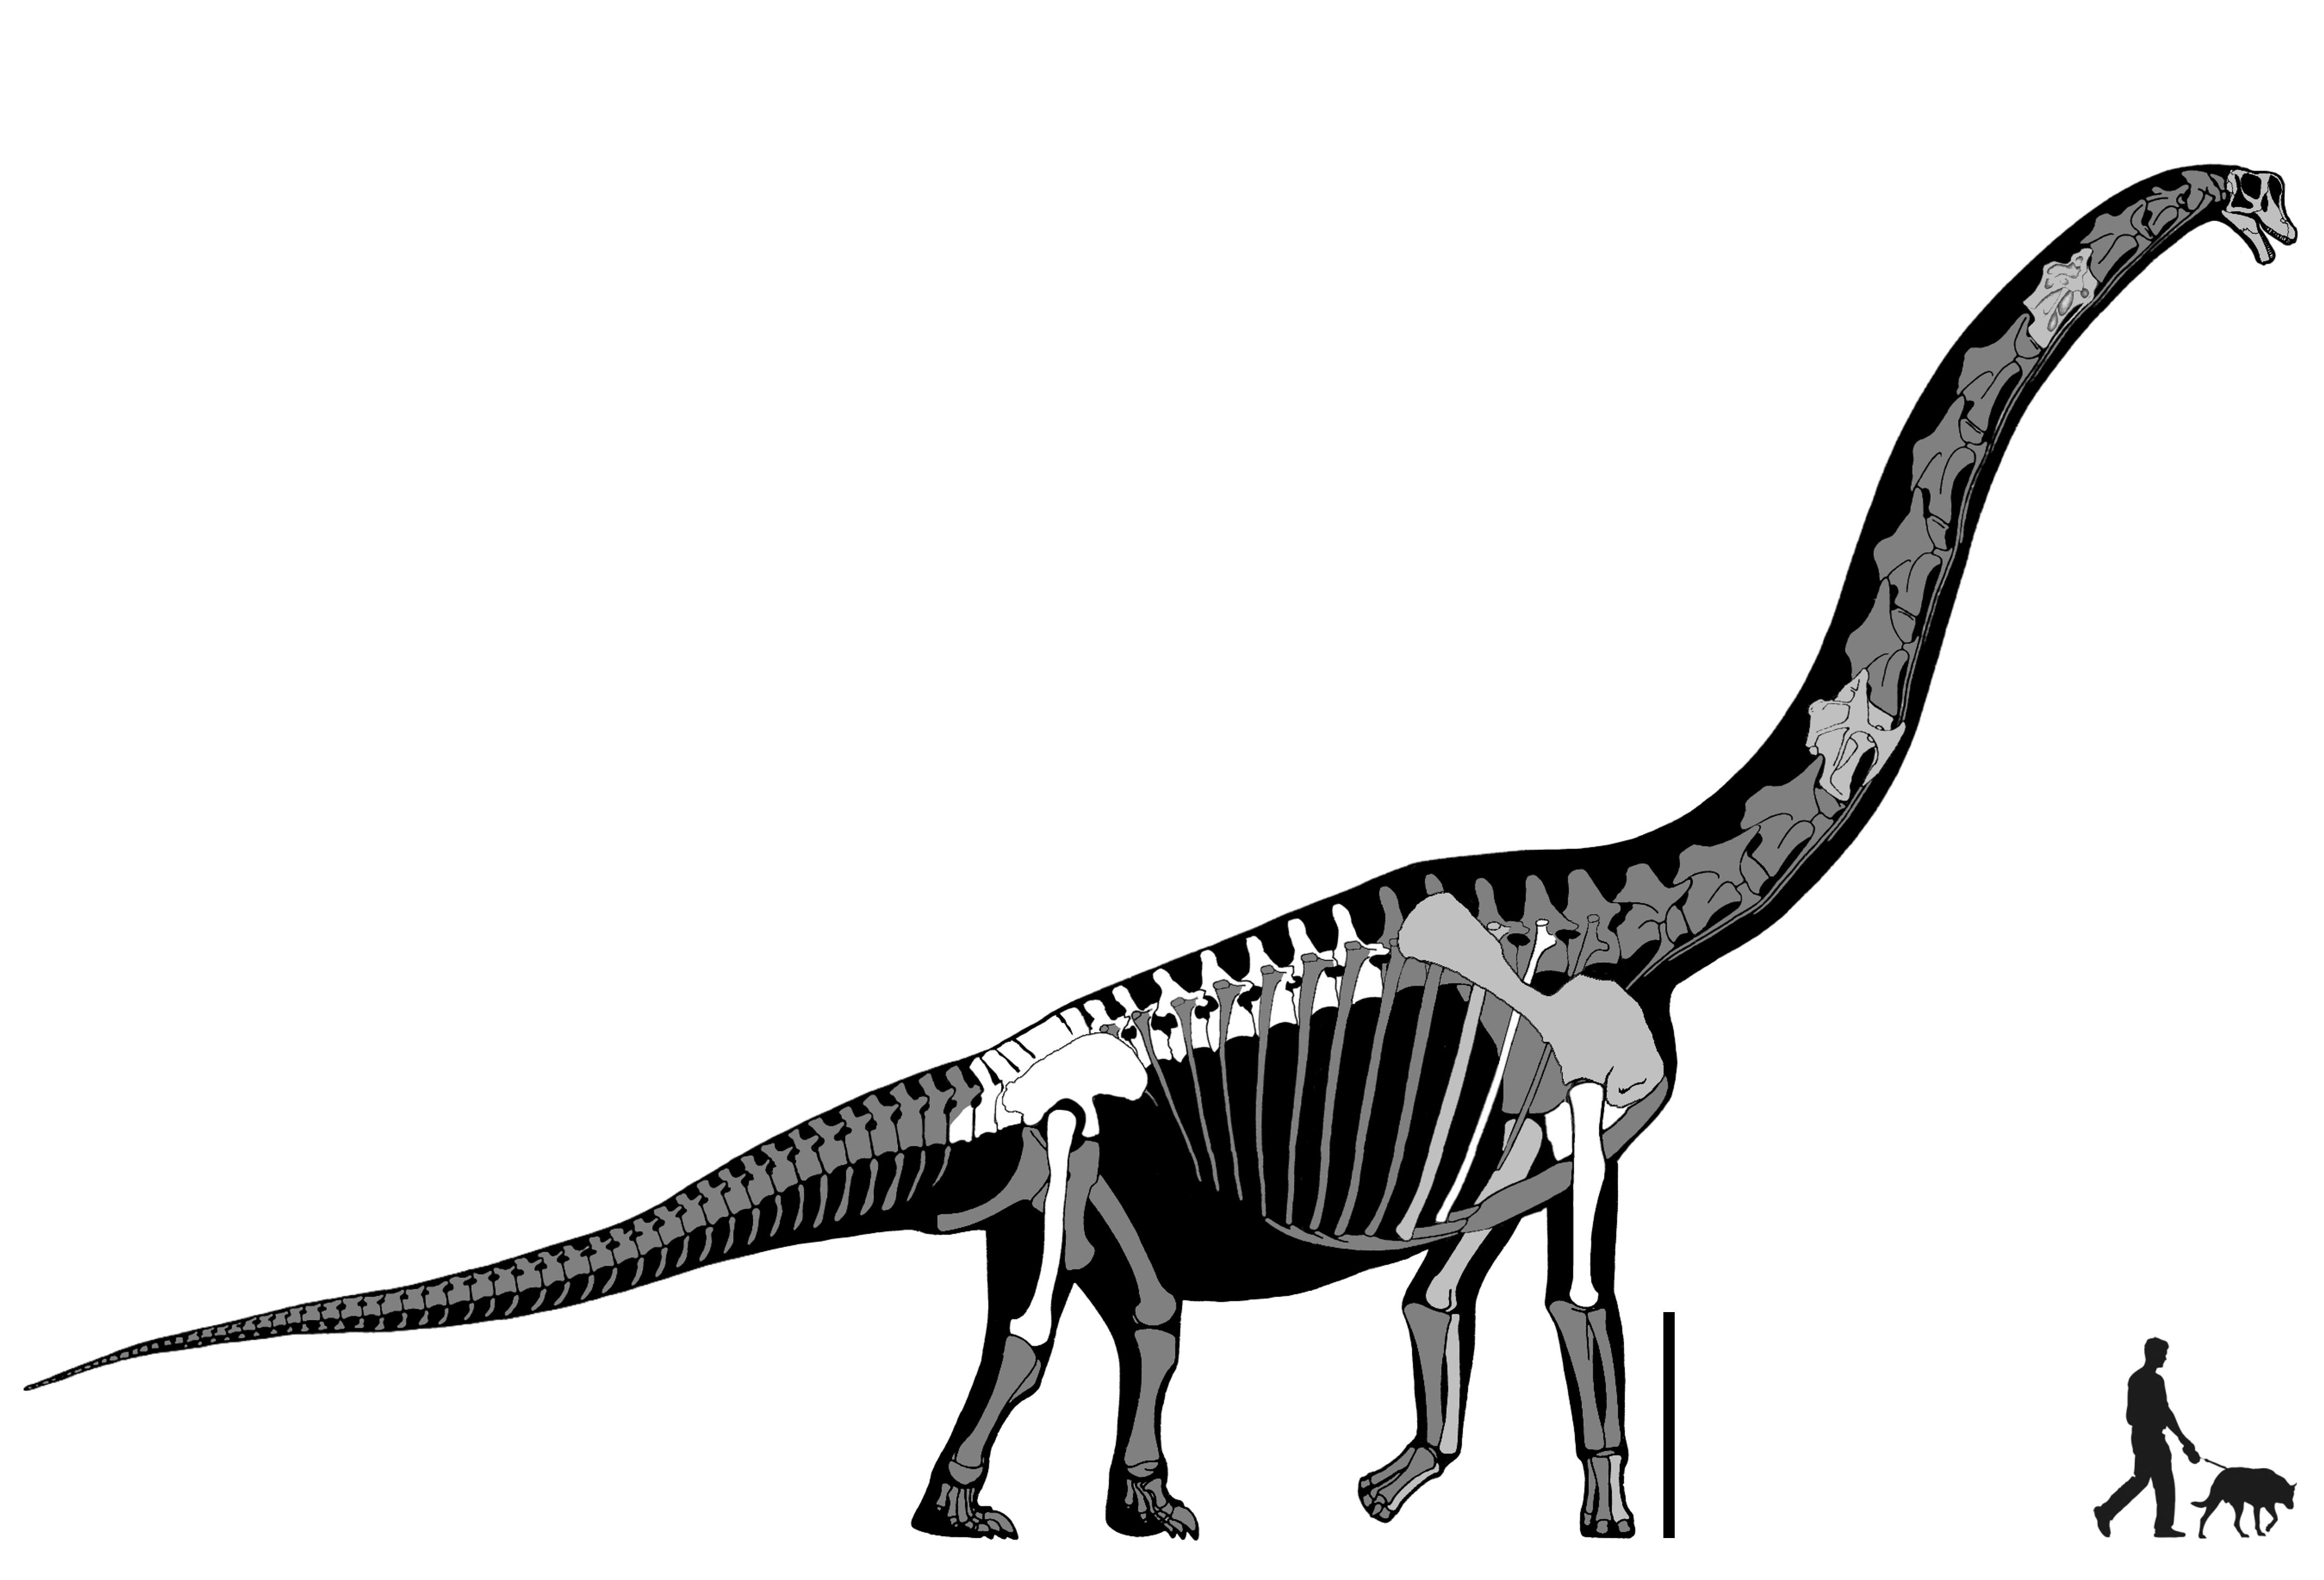 Taylor-SVP-Brachiosaurus-fig7-reconstruction-R3.jpe